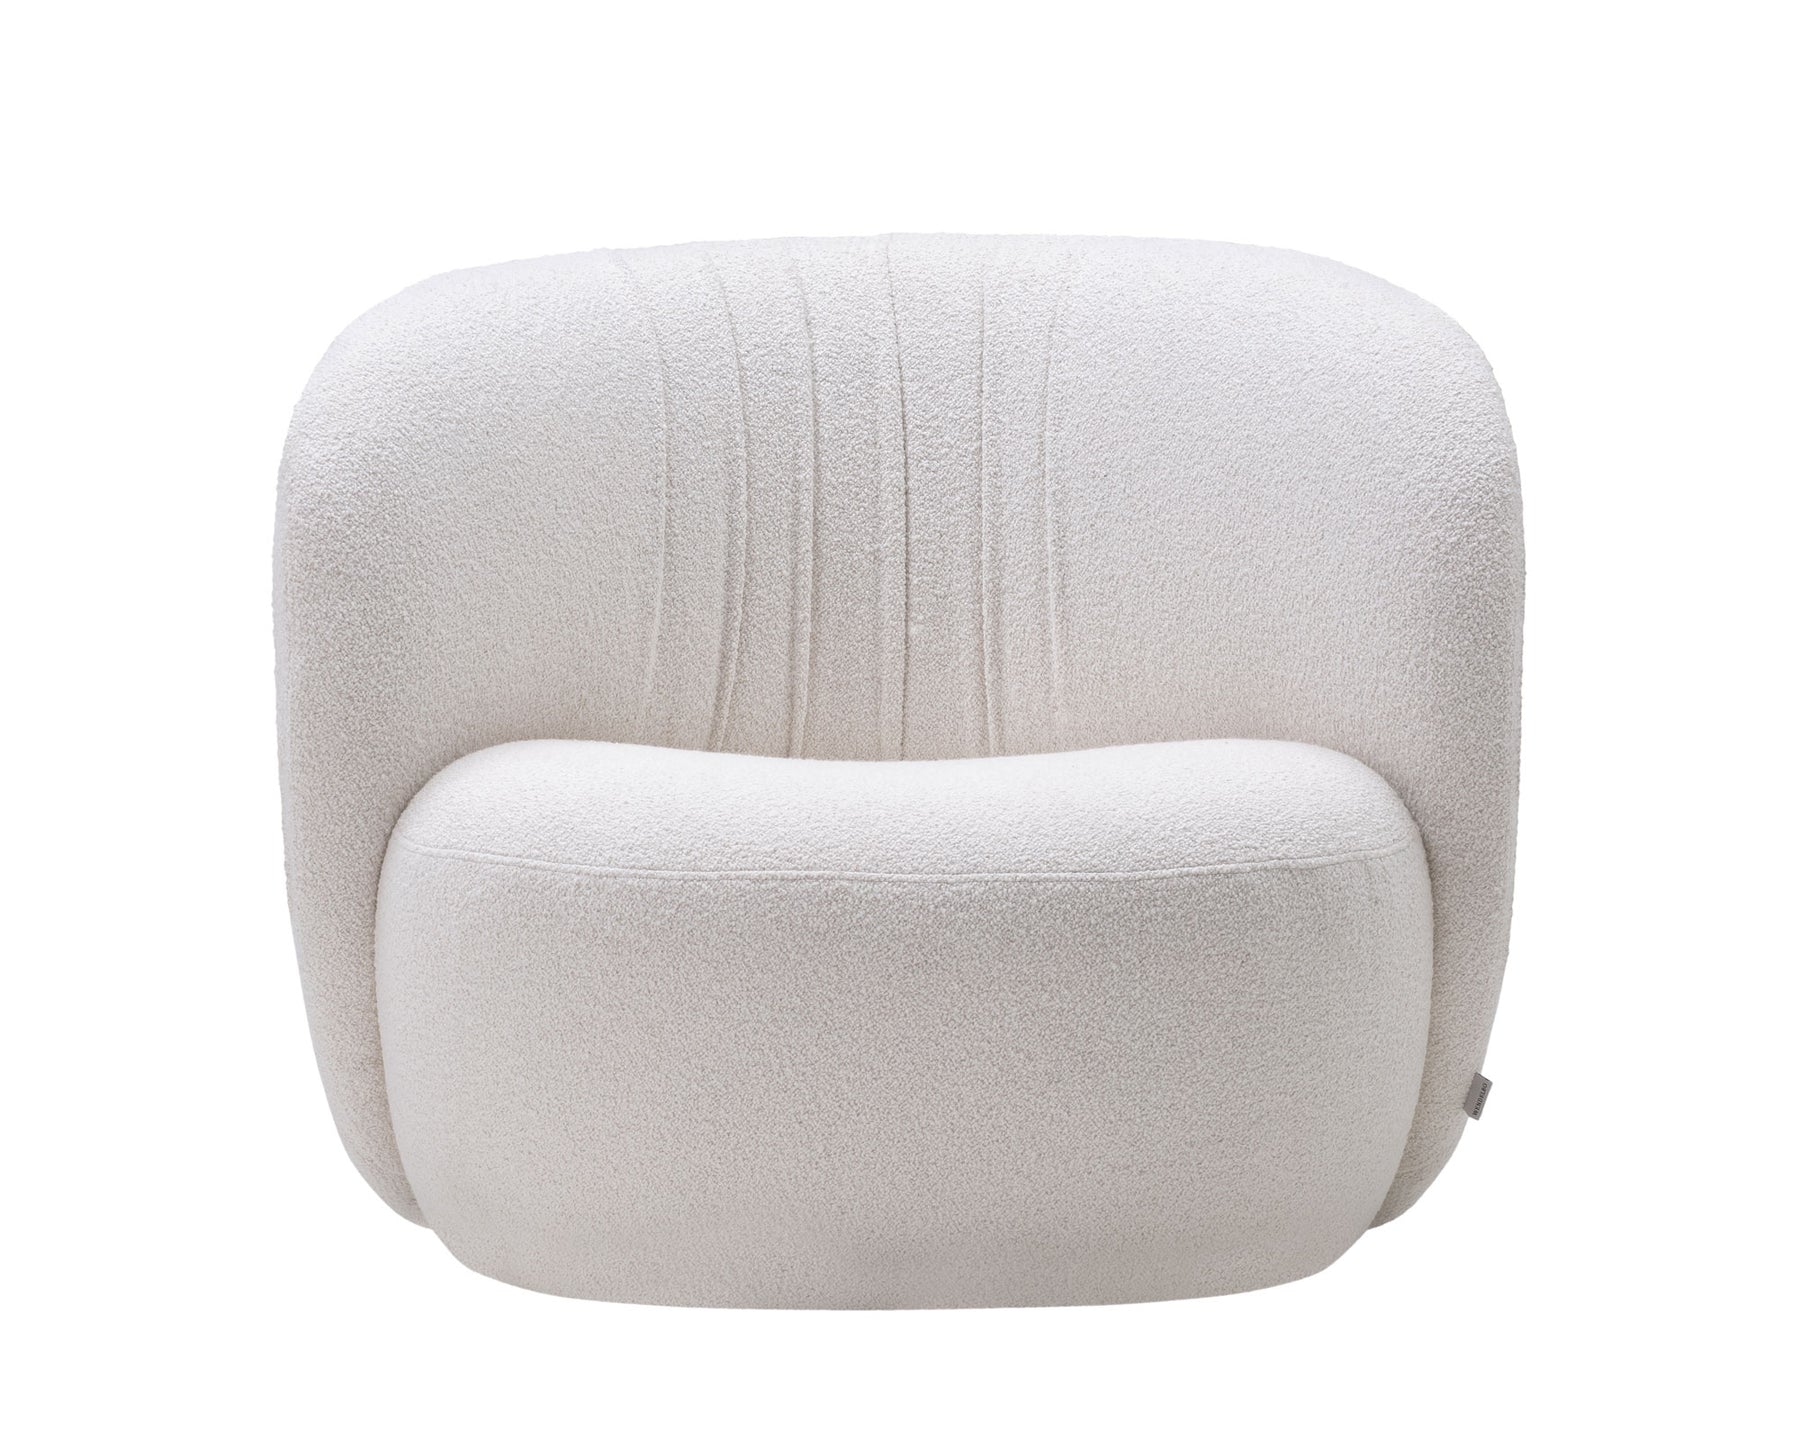 Ovata Chair - Large